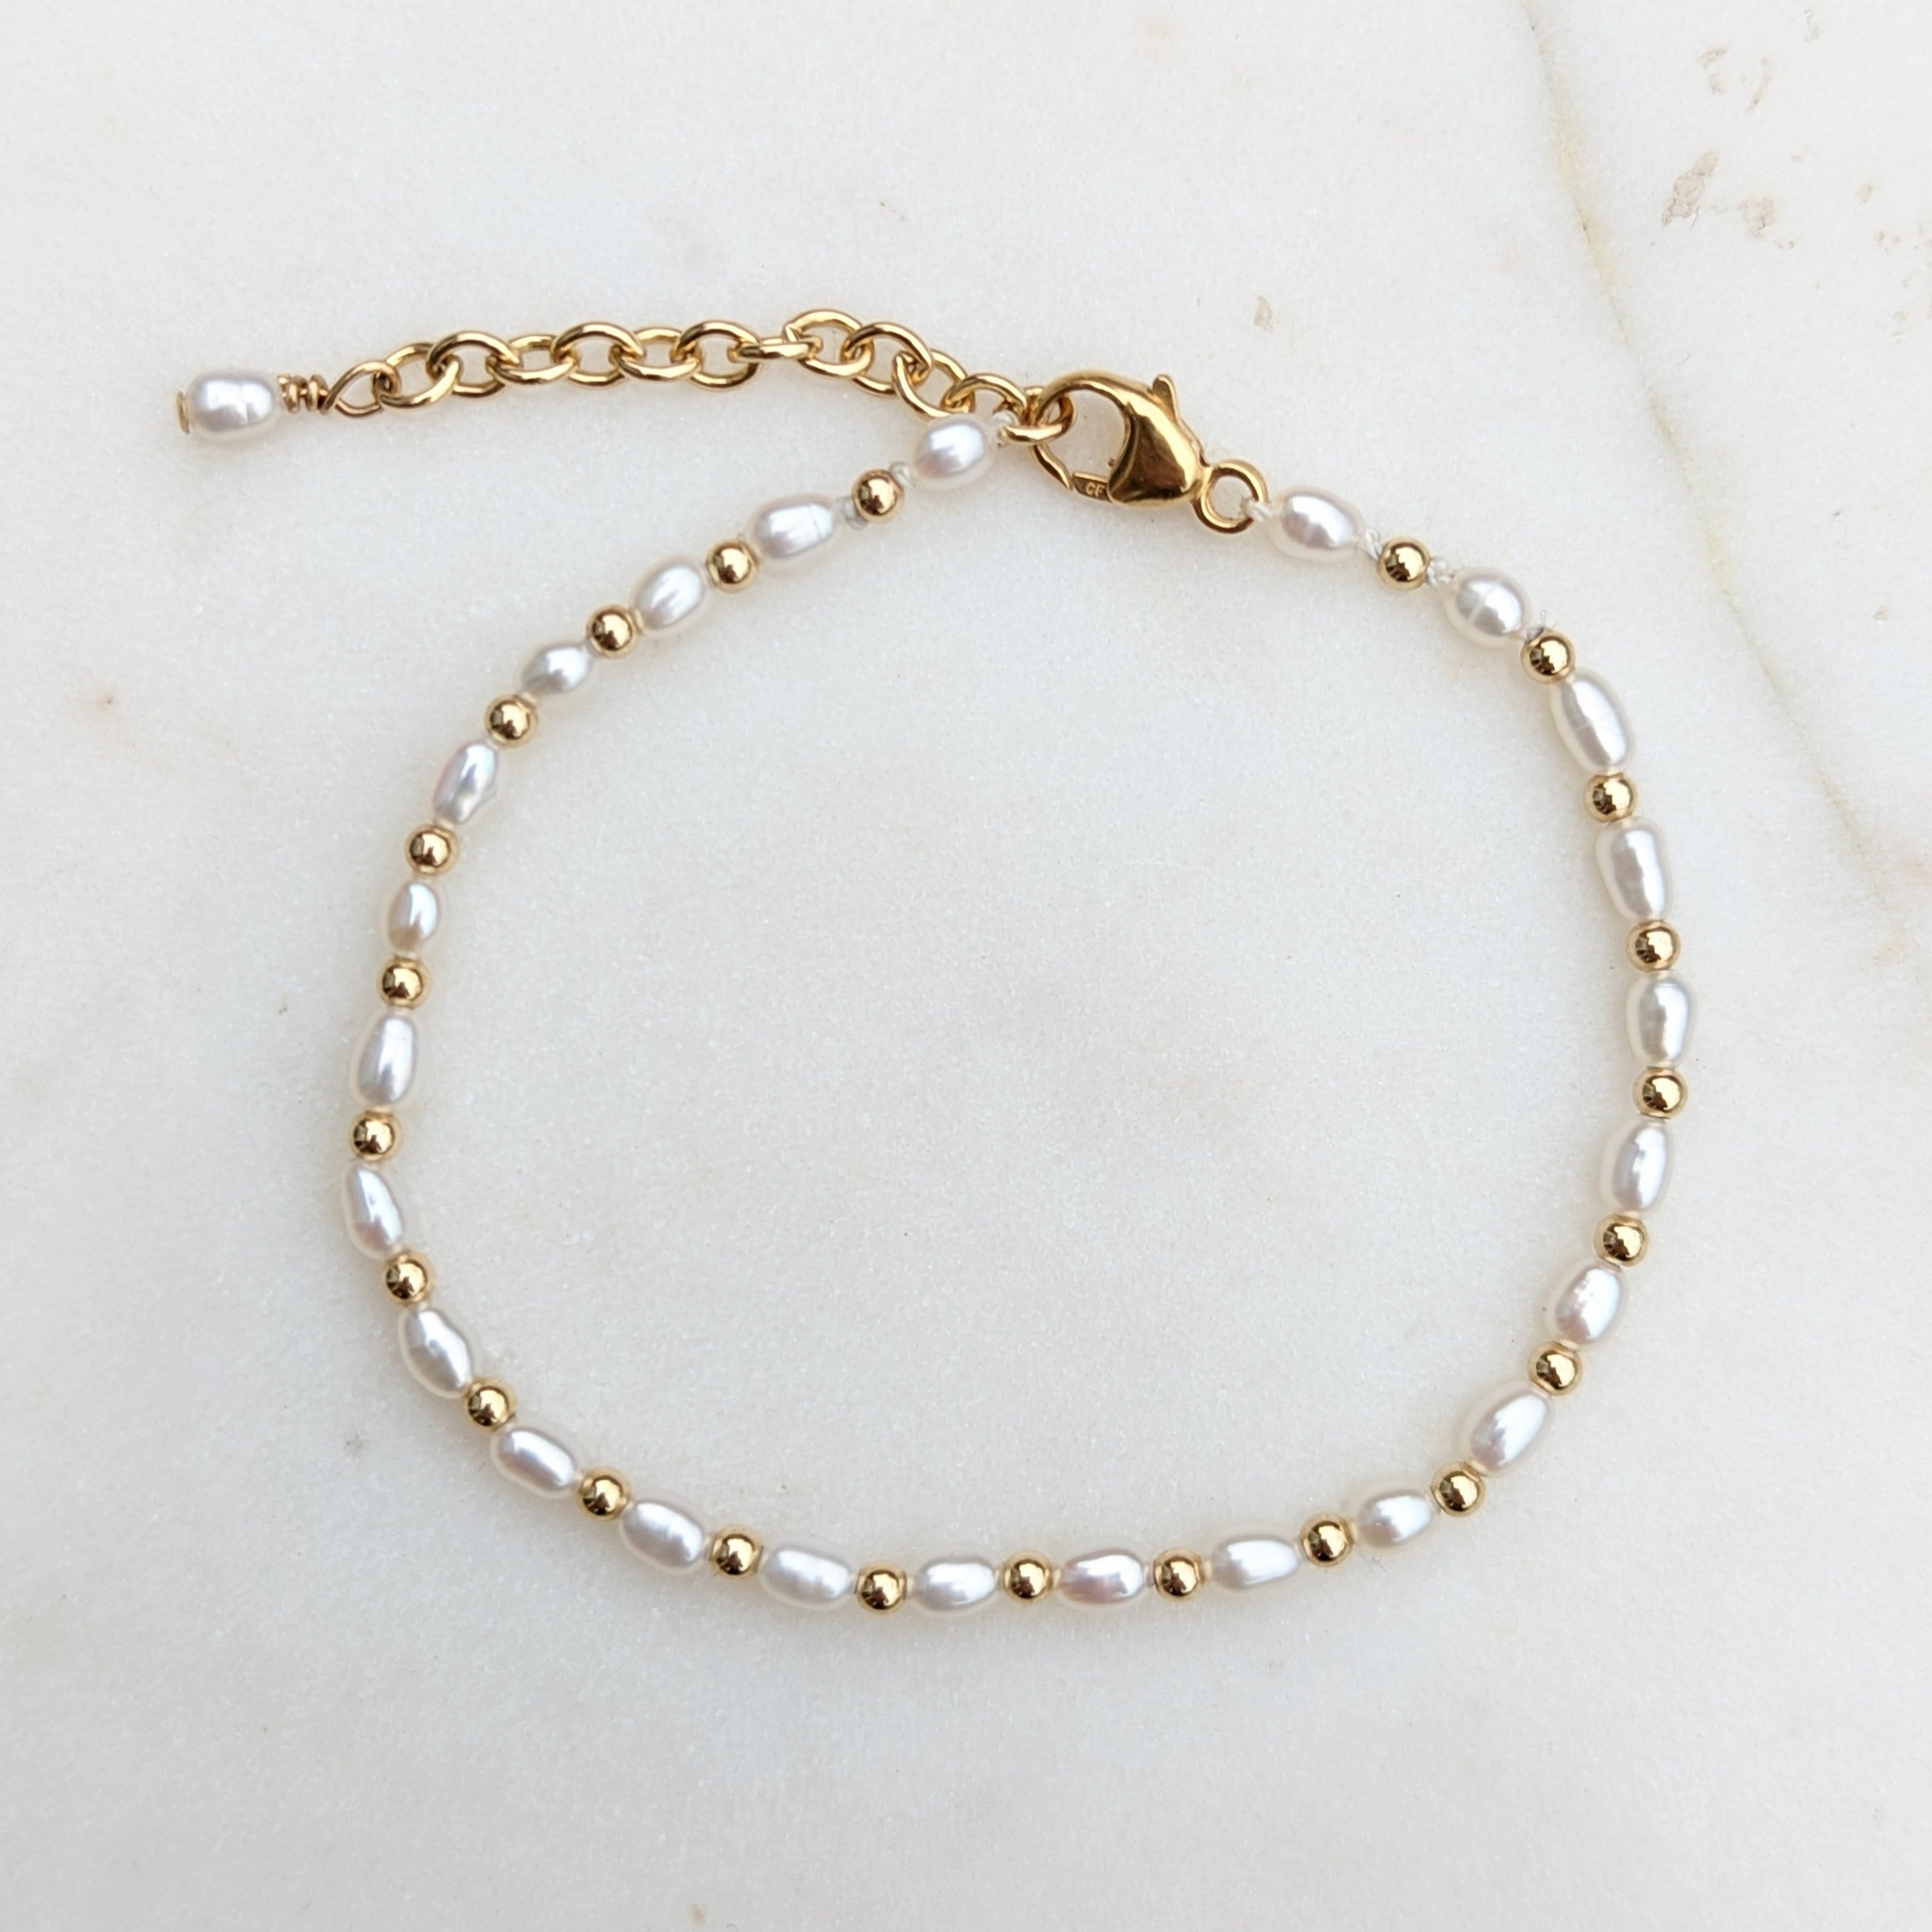 Tiny pearl and bead bracelet